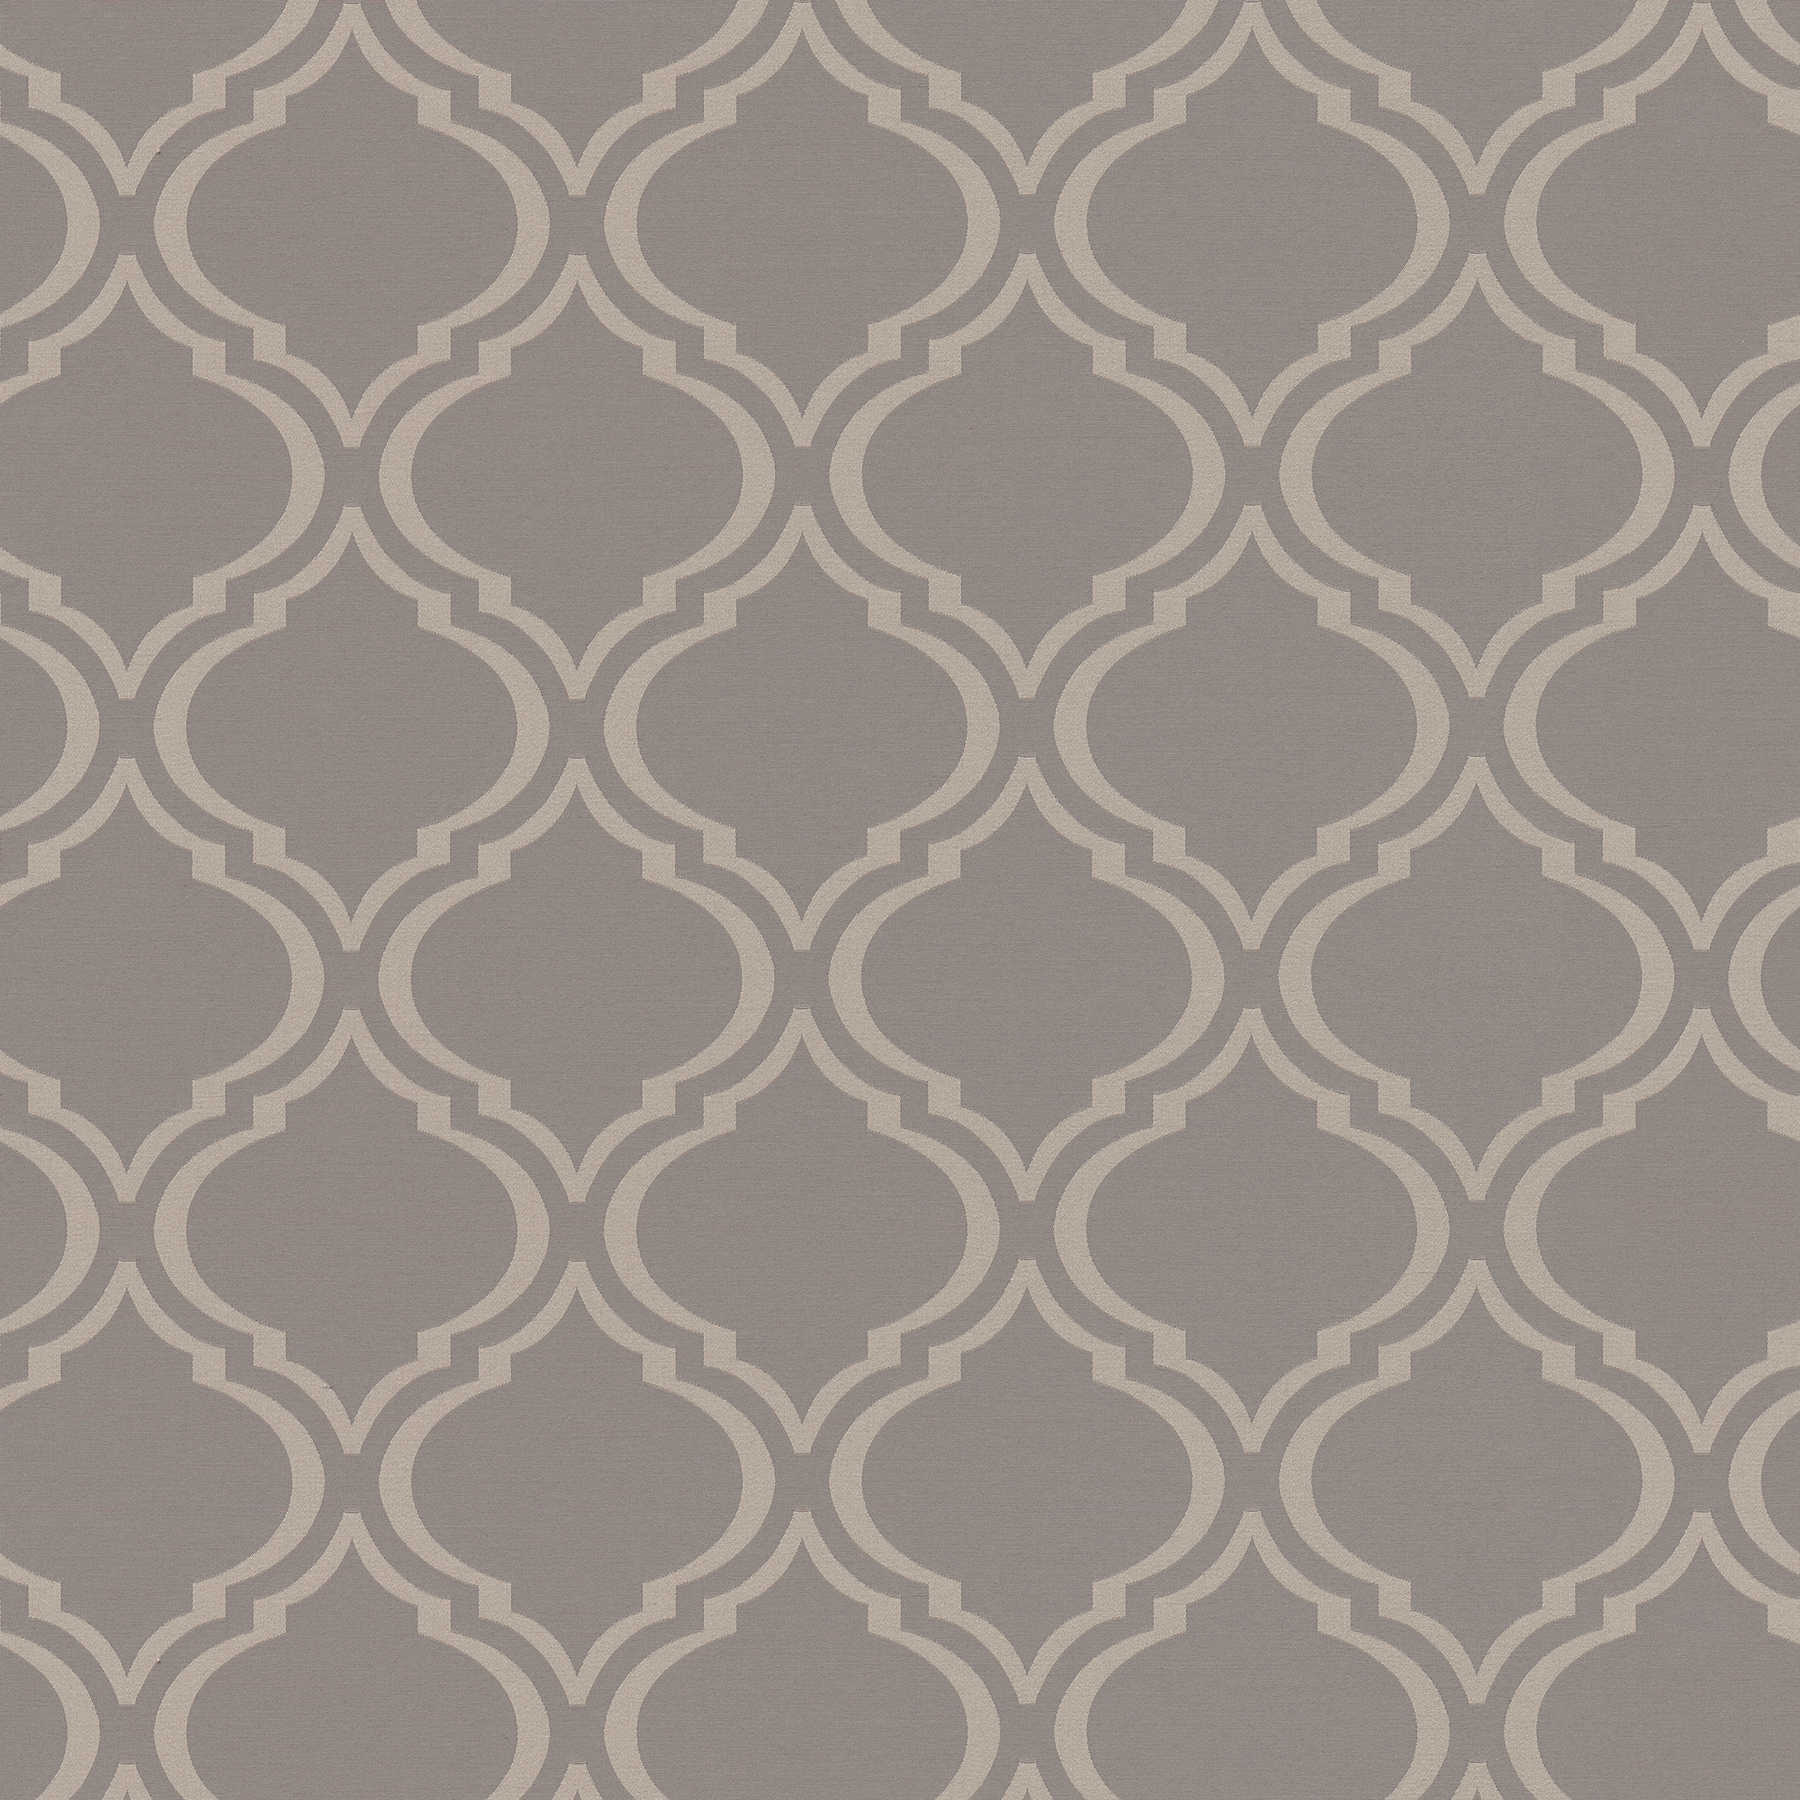 Wallpaper retro design with art deco pattern - grey
